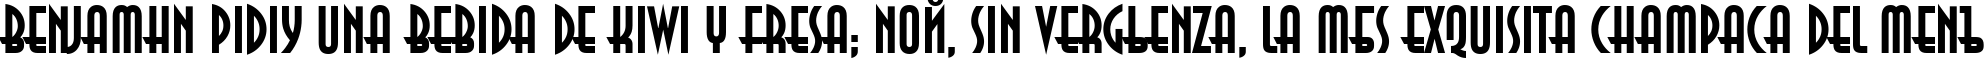 Пример написания шрифтом AnnaCTT Bold текста на испанском